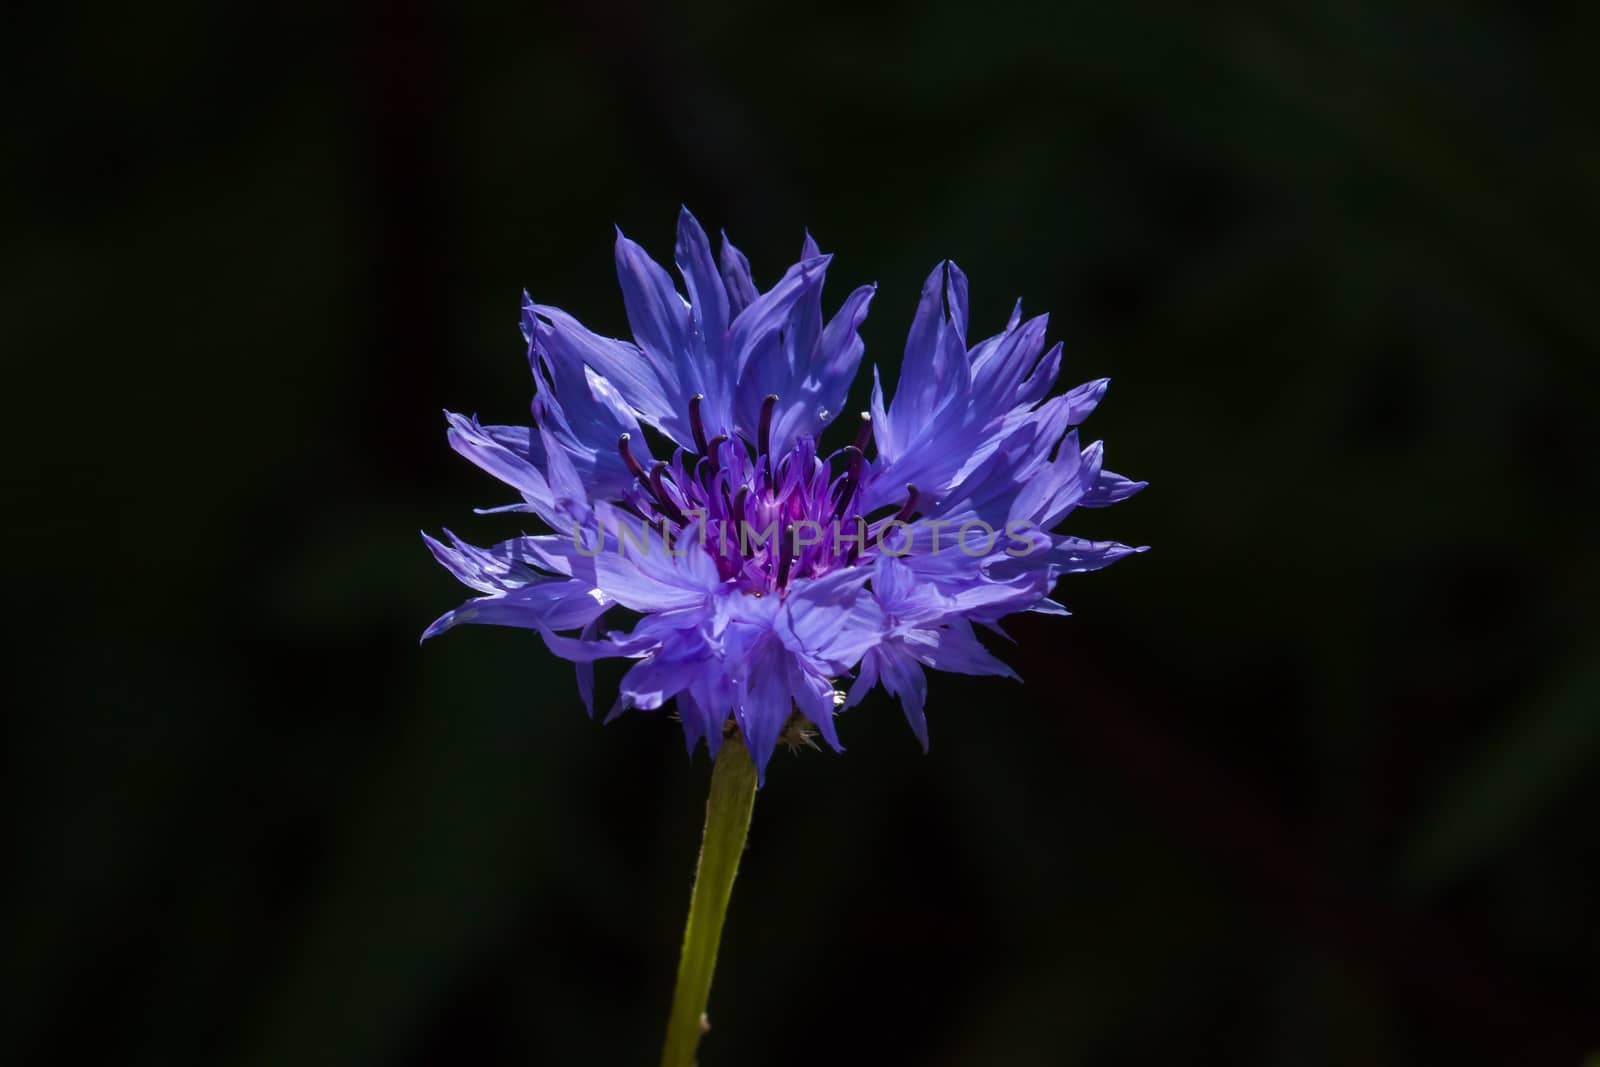 Beautiful deep purple blue Cornflower in sunlight against dark background.